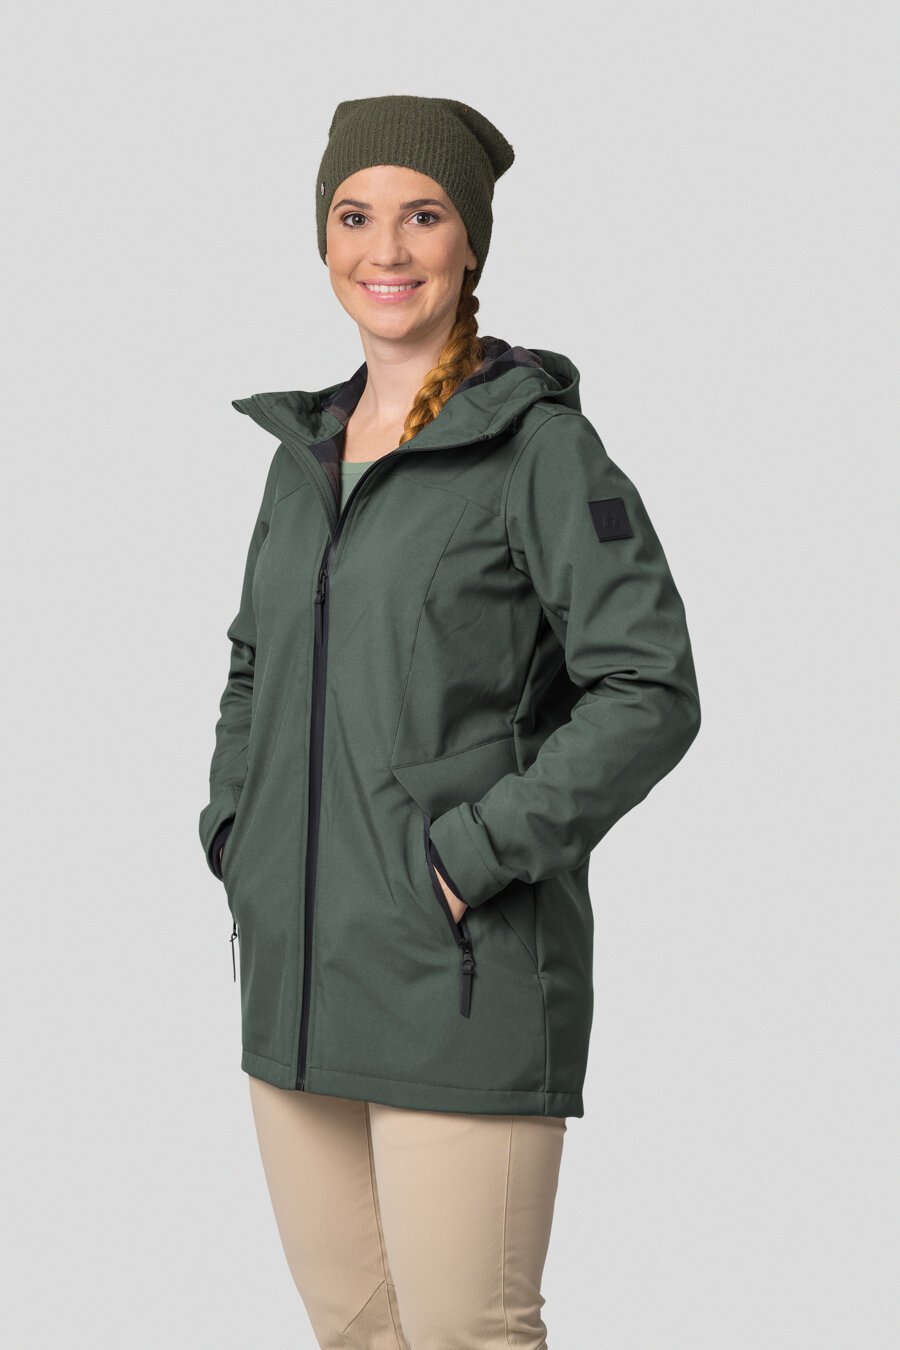 Jacket HANNAH AKAME Lady - Hannah - Outdoor clothing and equipment